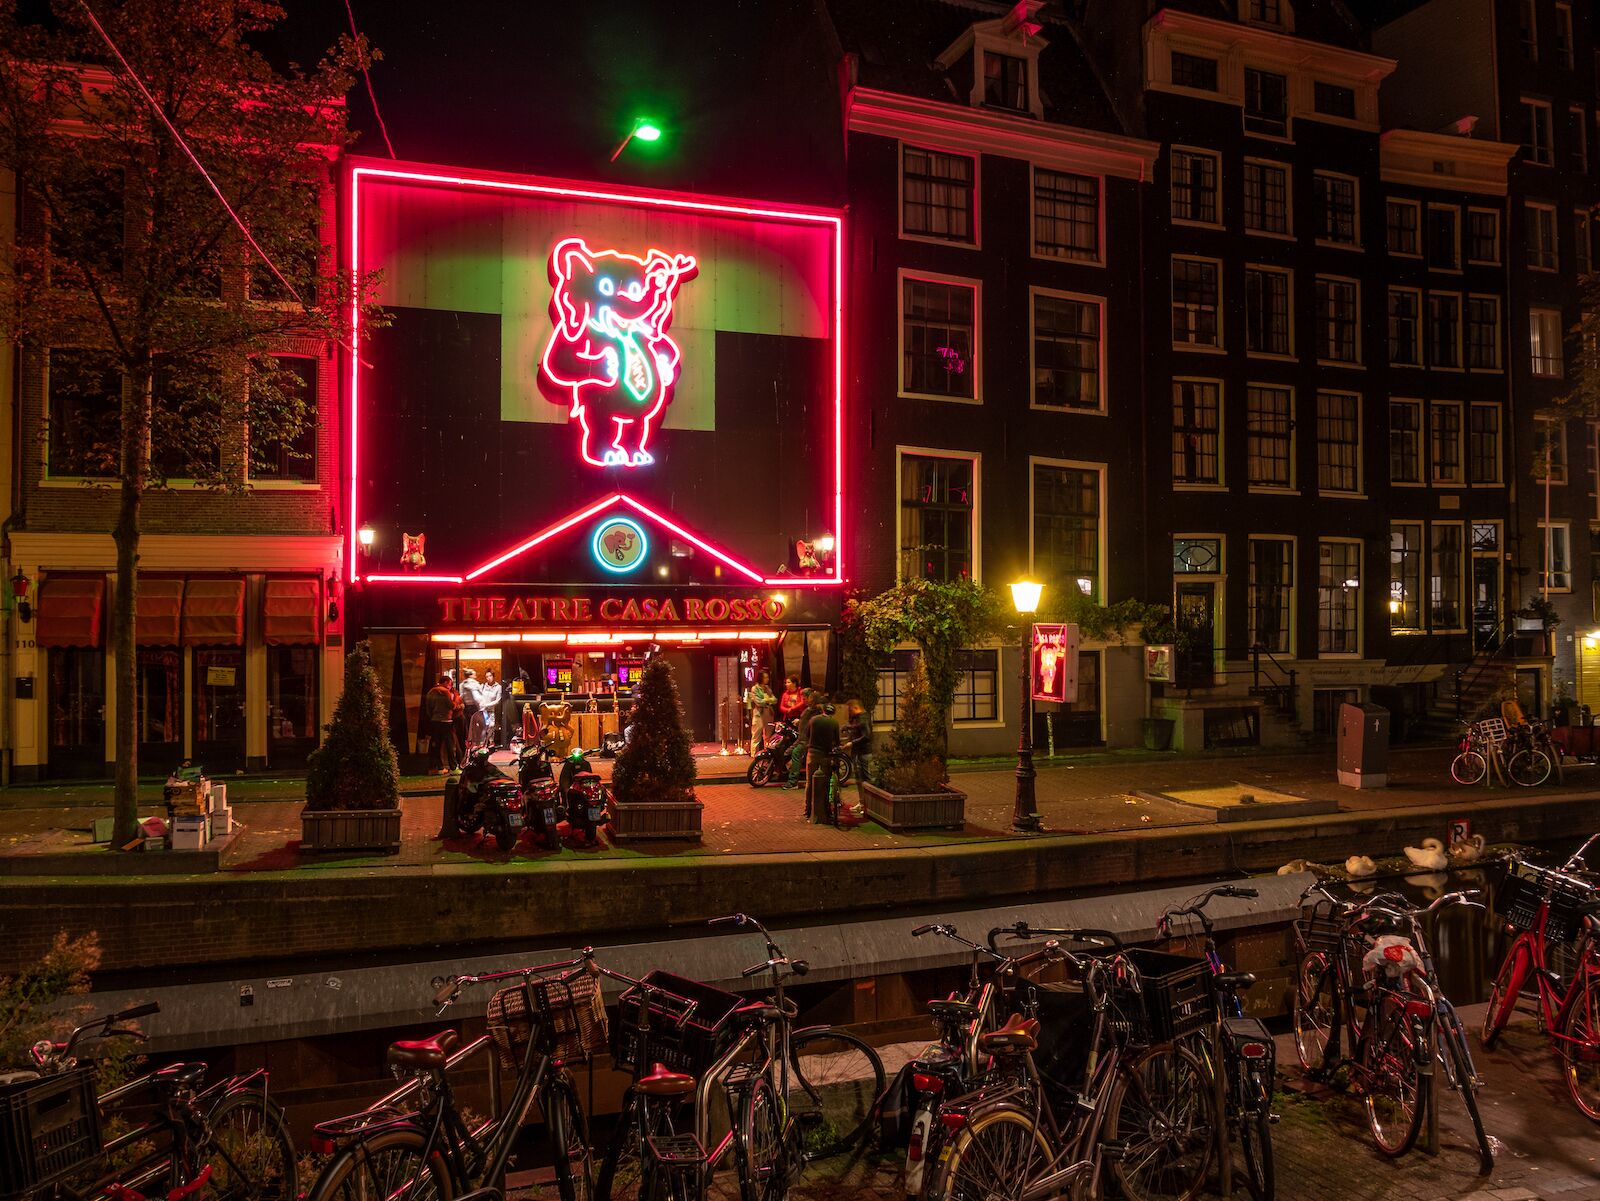 Facade of the Casa Rosso theater, a famous sex show venue in Amsterdam